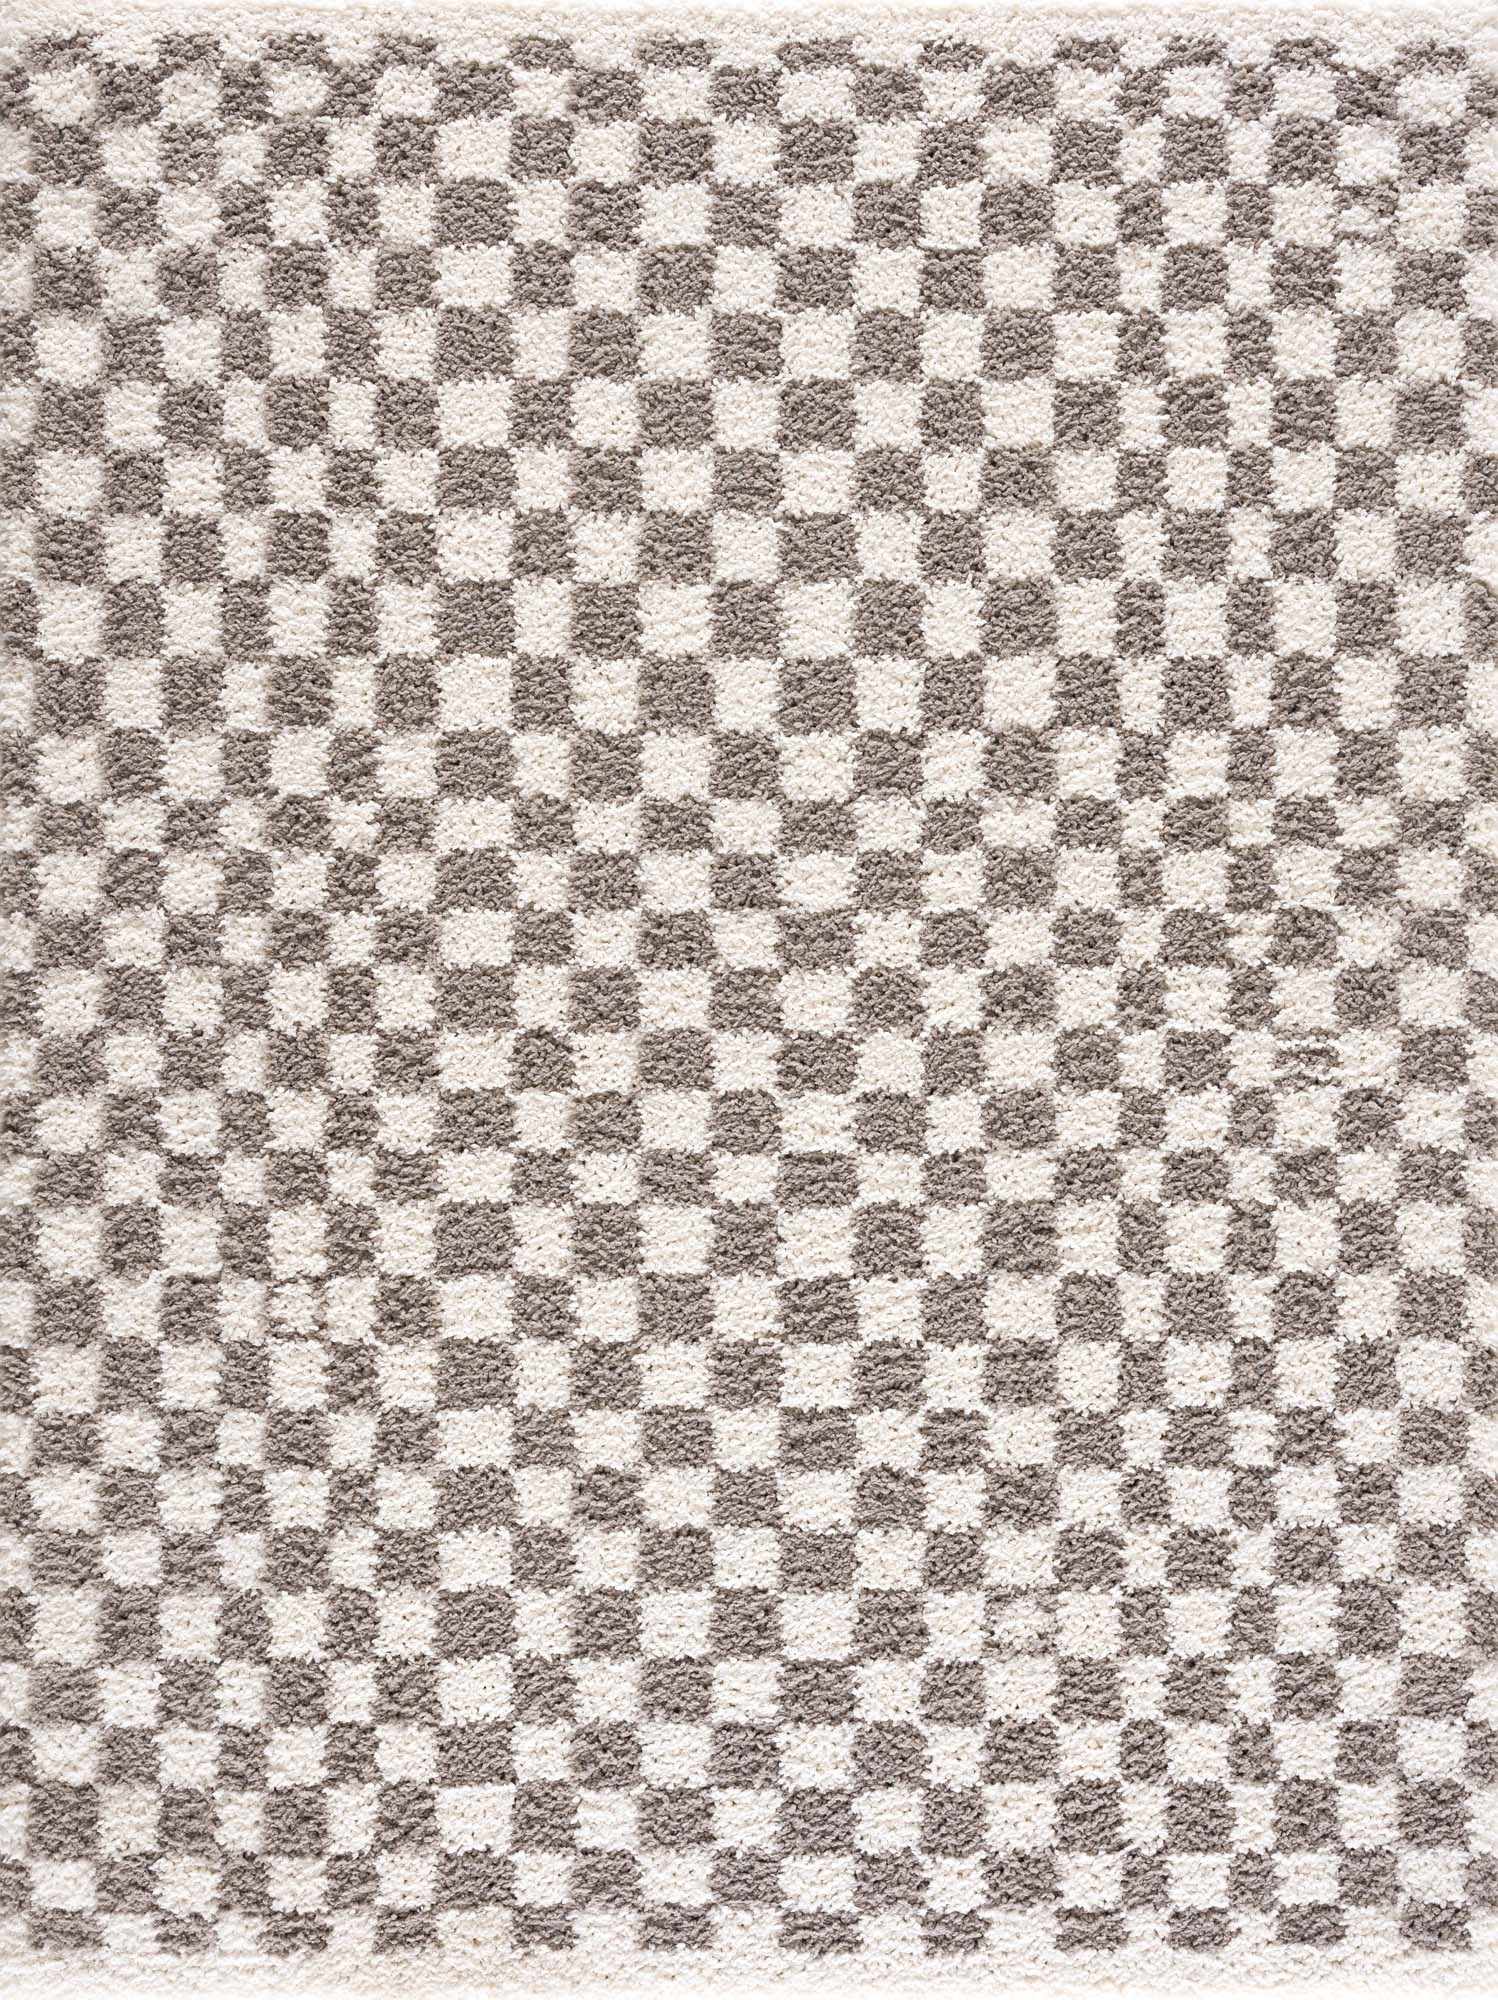 Hauteloom Kieu Taupe Checkered Area Rug - 7'10 x 10' Rectangle